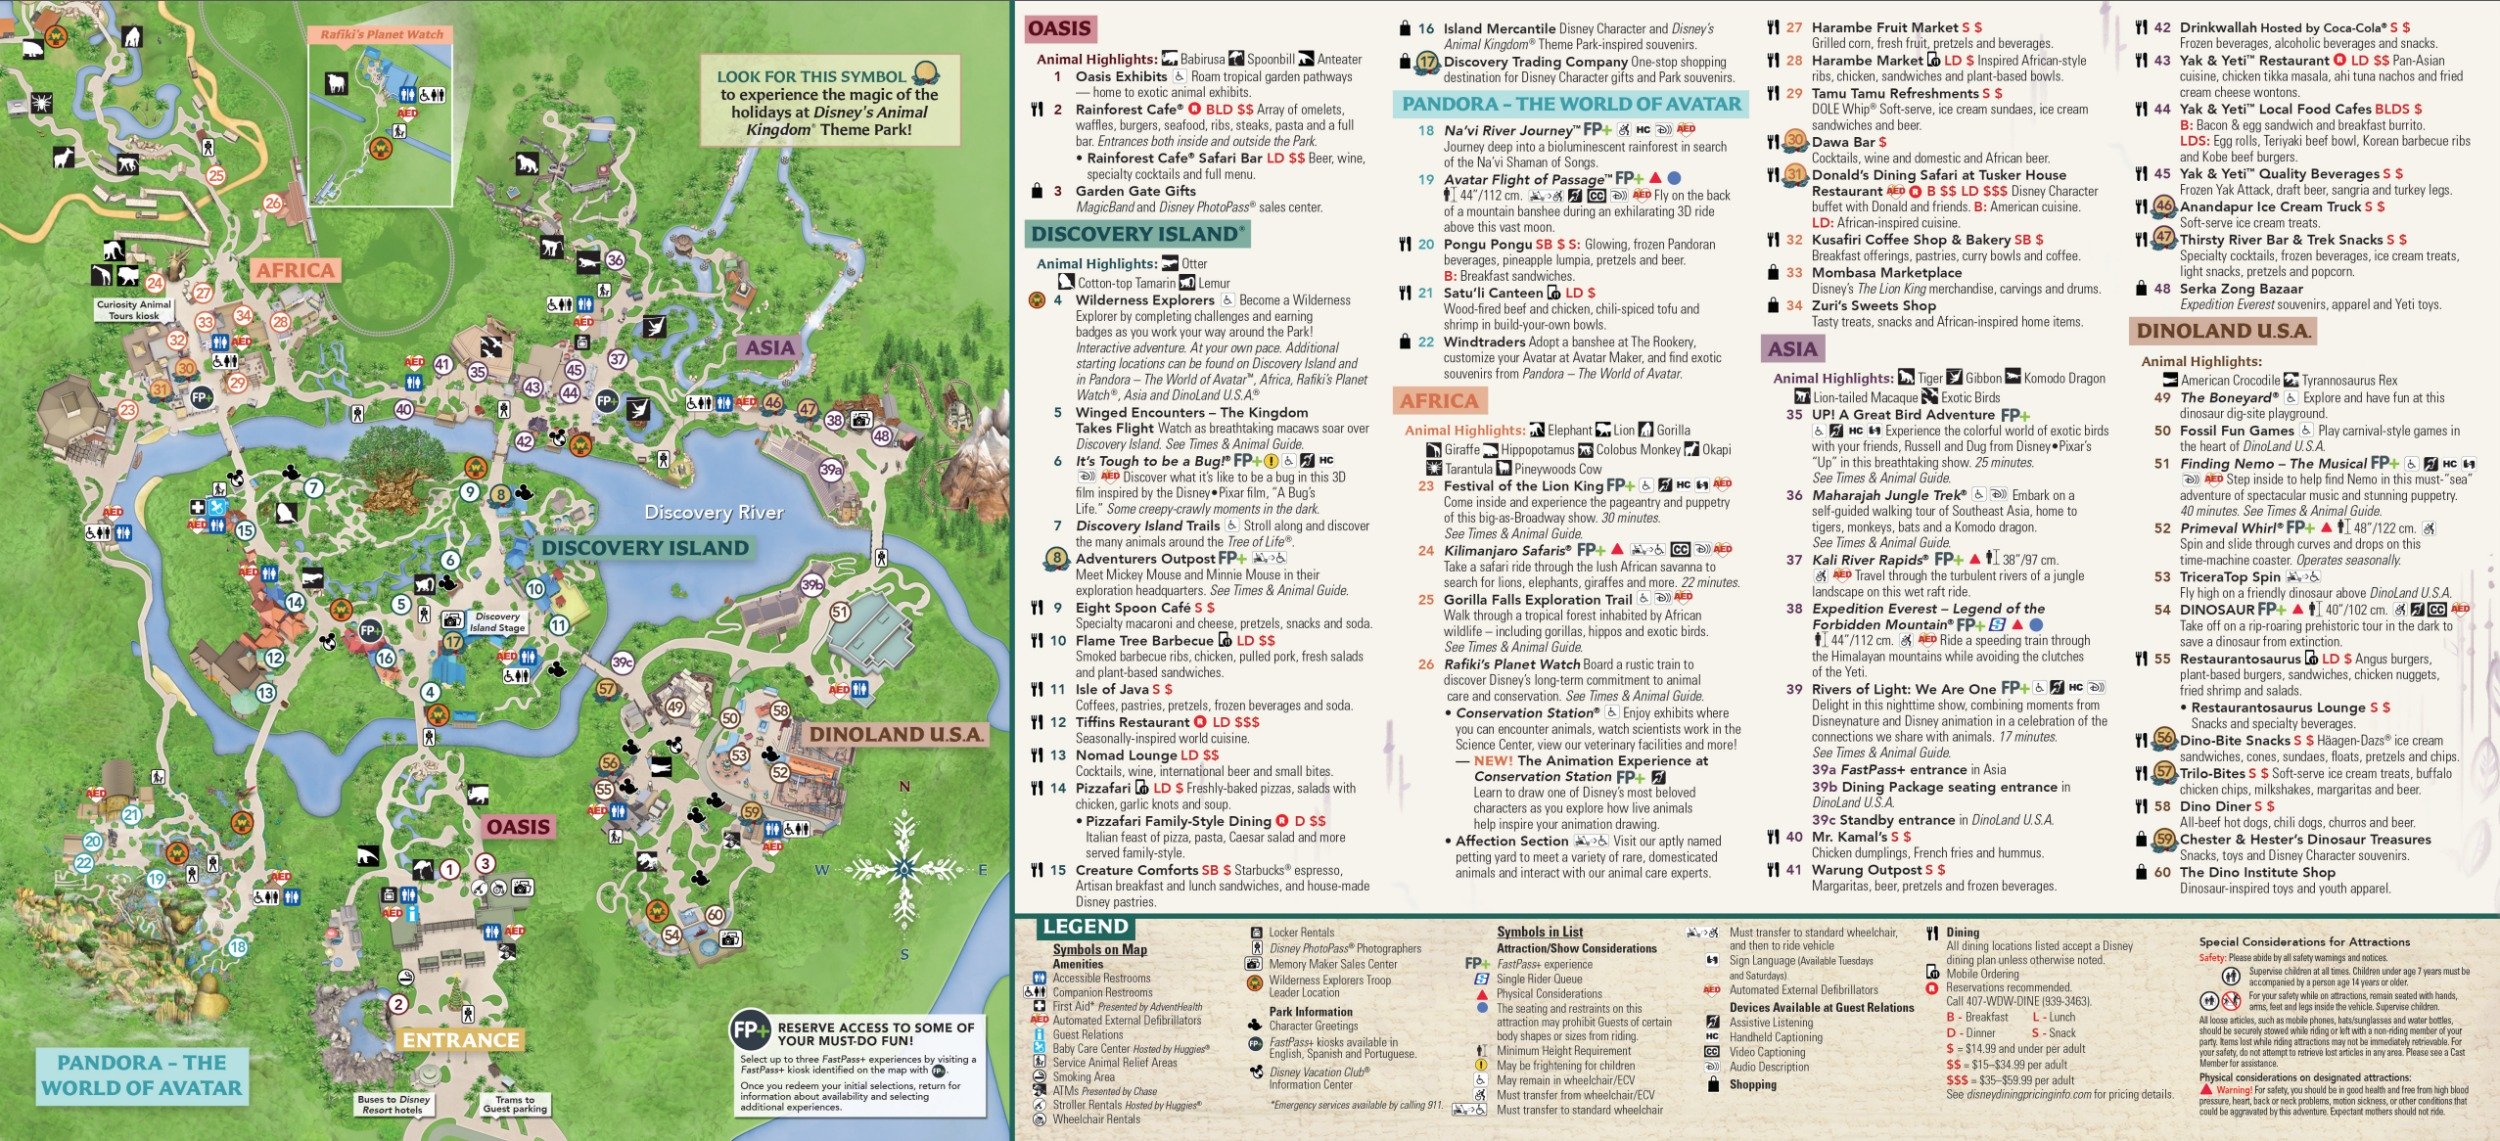 Disney's Animal Kingdom CHEAP TICKETS | Park Hours, Insider Info